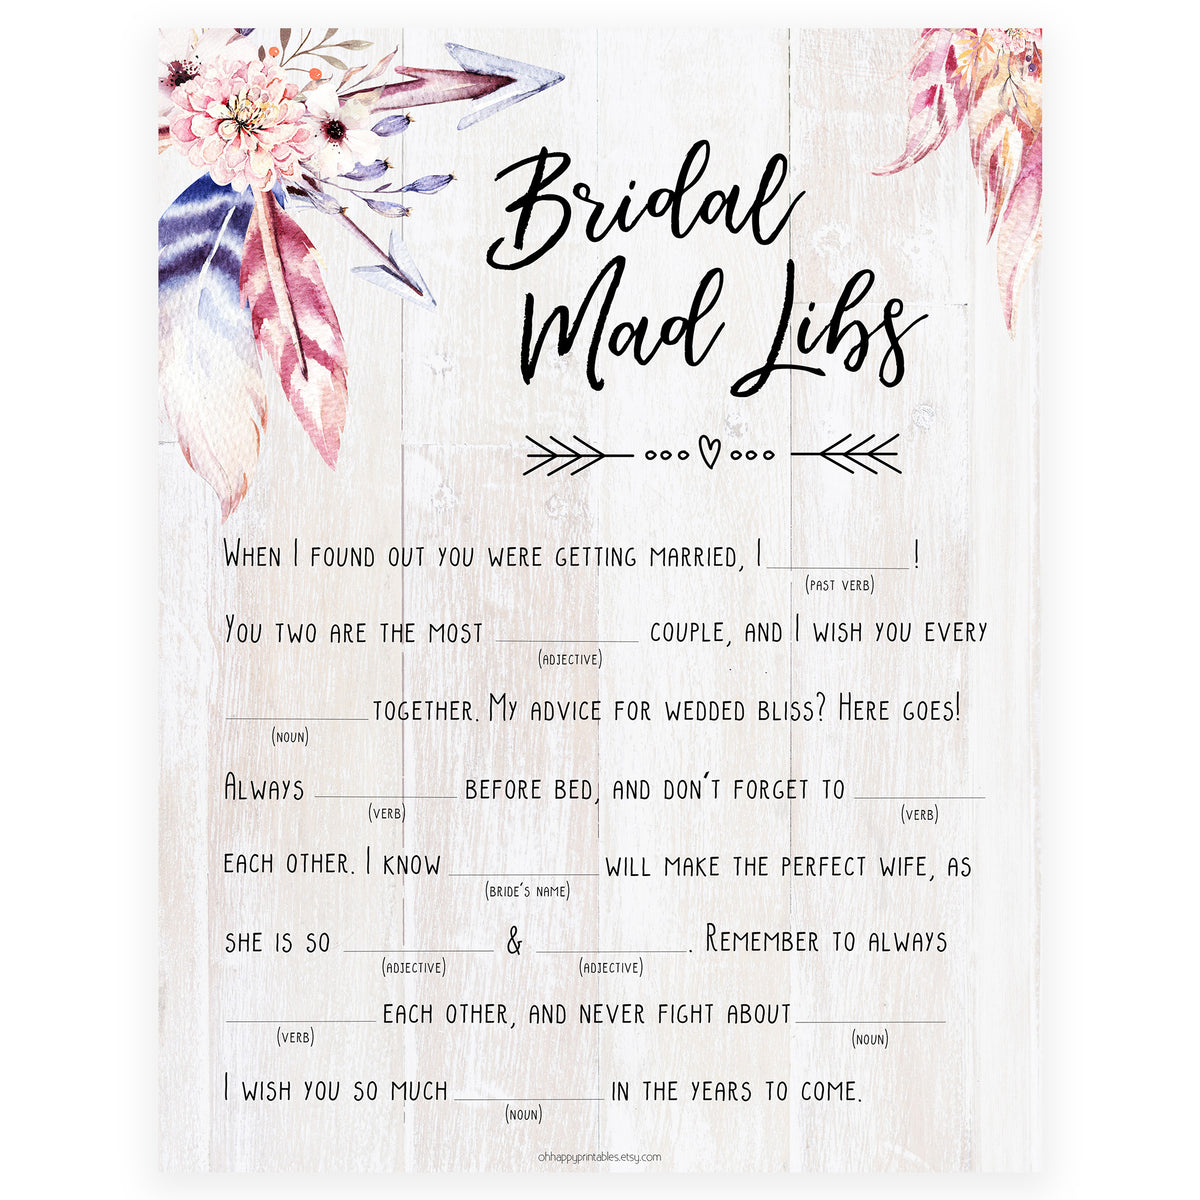 Bridal Mad Libs Game - Boho